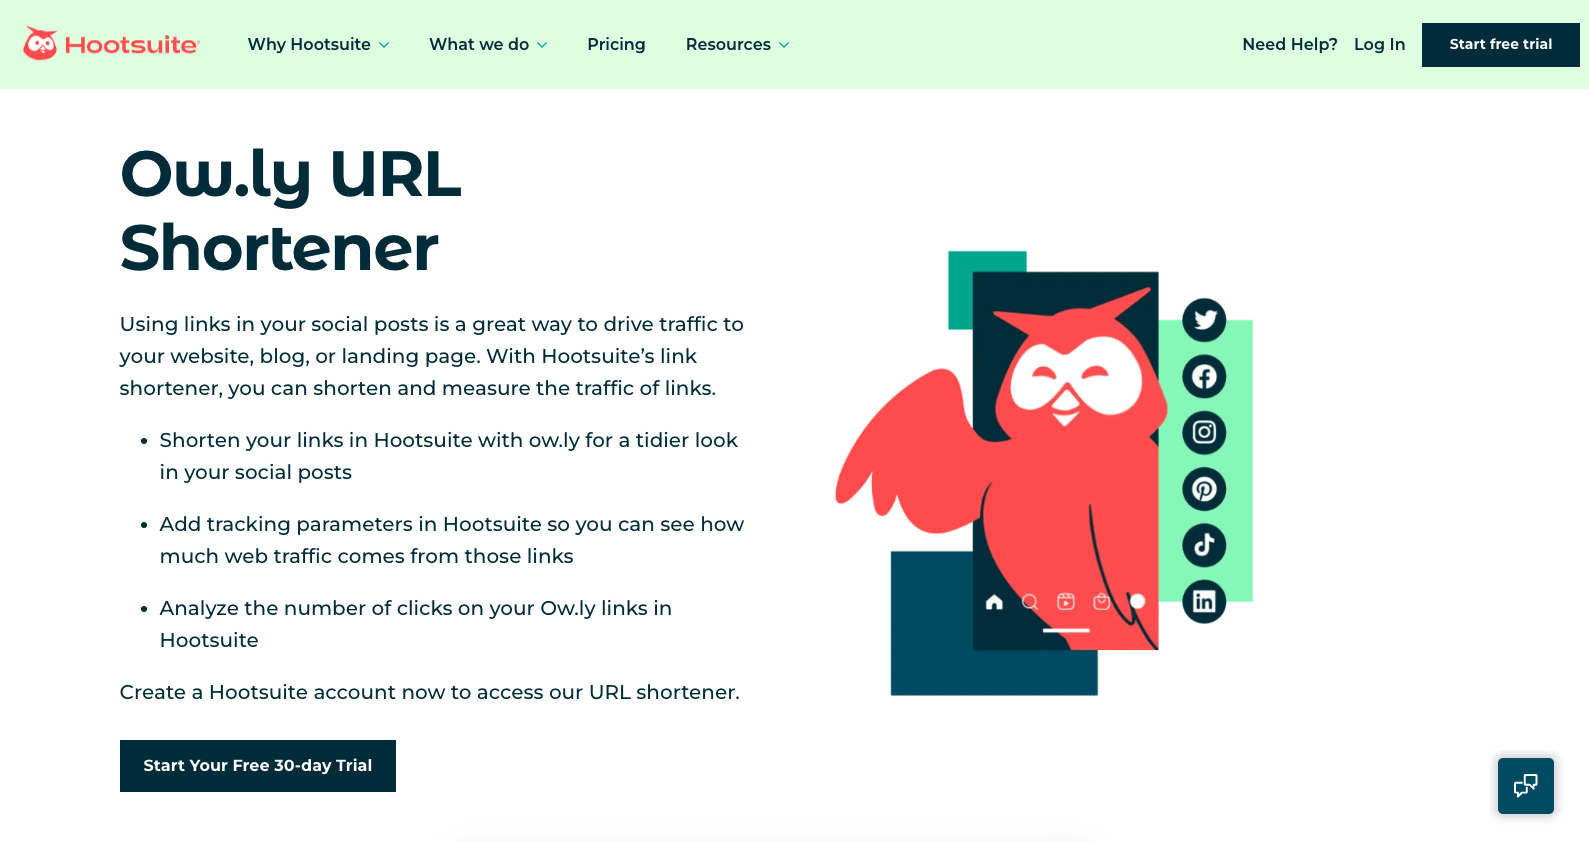 Owly is a URL shortener service that's part of Hootsuite.